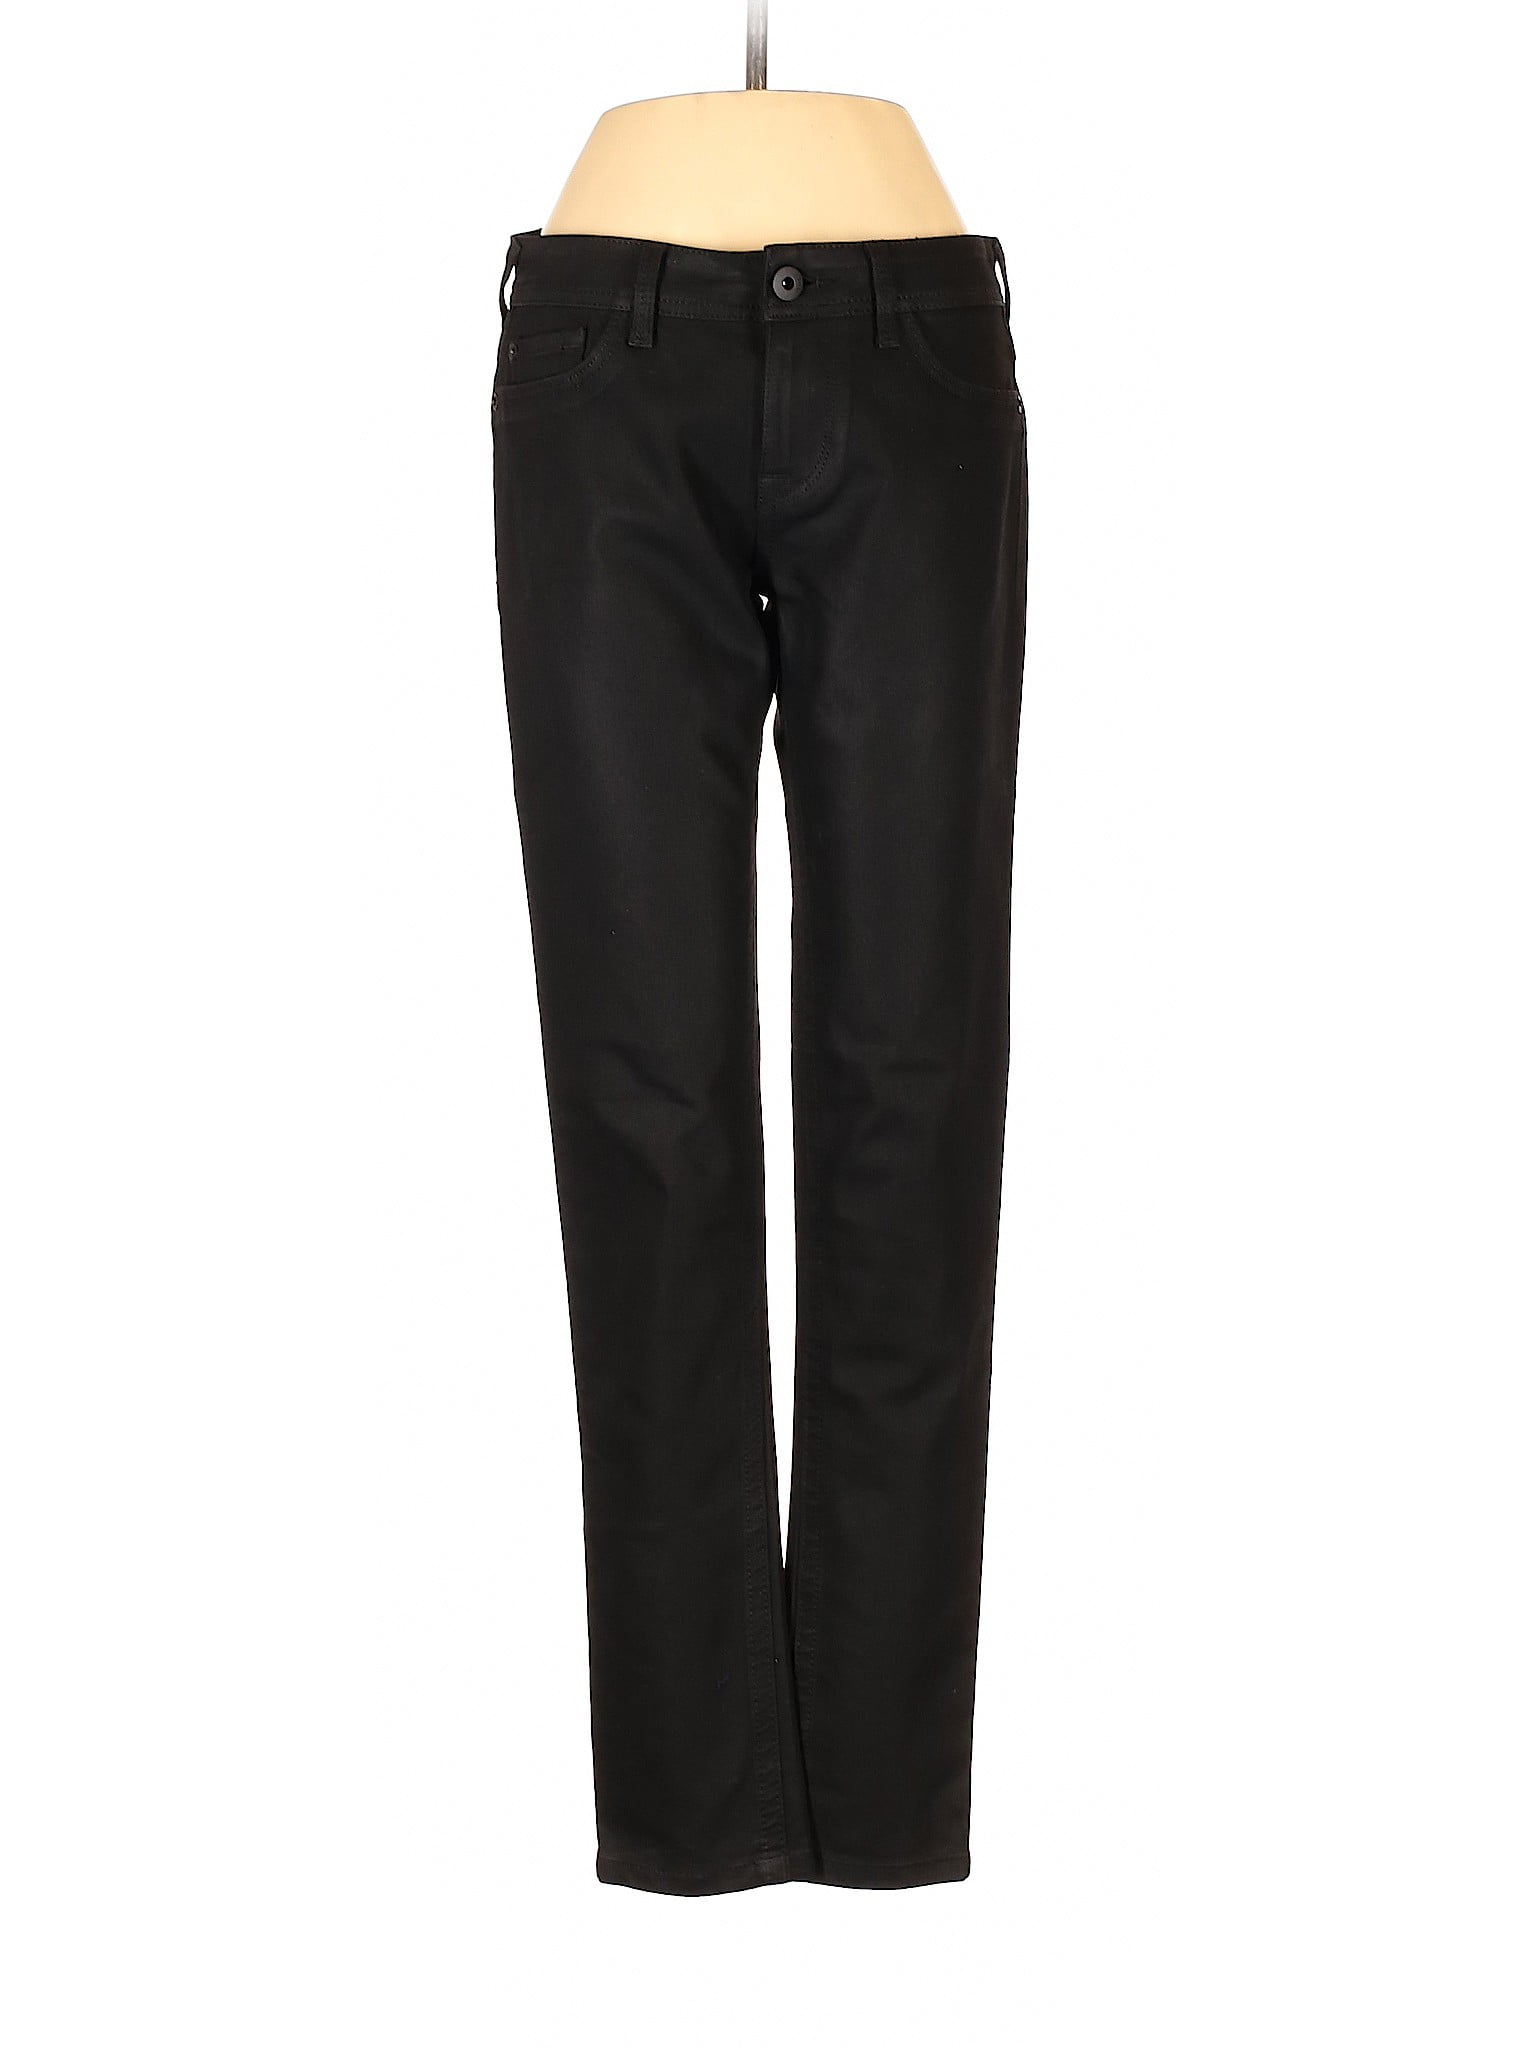 DL1961 - Pre-Owned DL1961 Women's Size 27W Jeans - Walmart.com ...